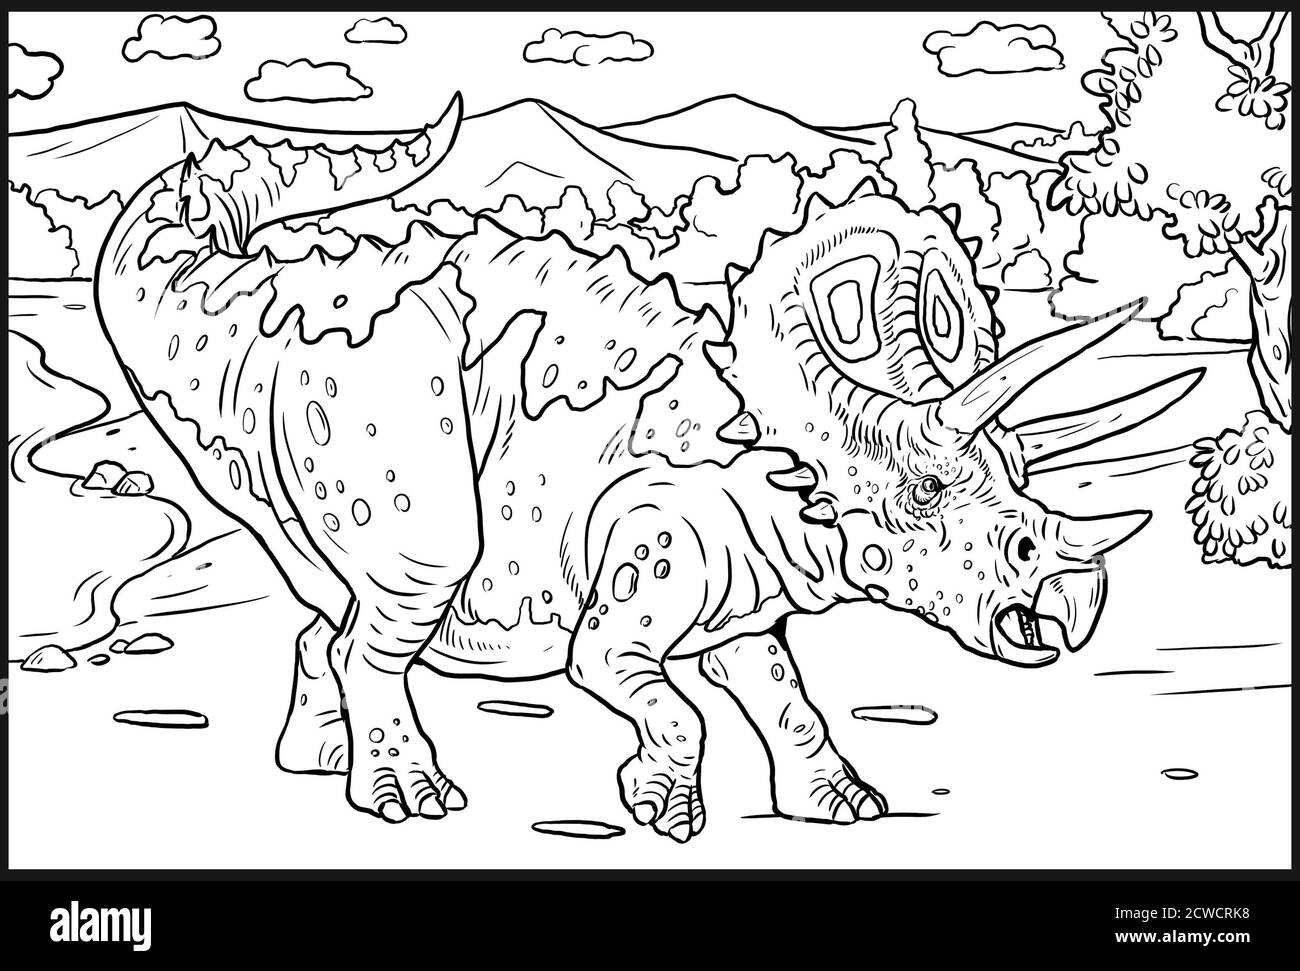 Herbivorous dinosaur - Triceratops. Dino outline drawing. Stock Photo